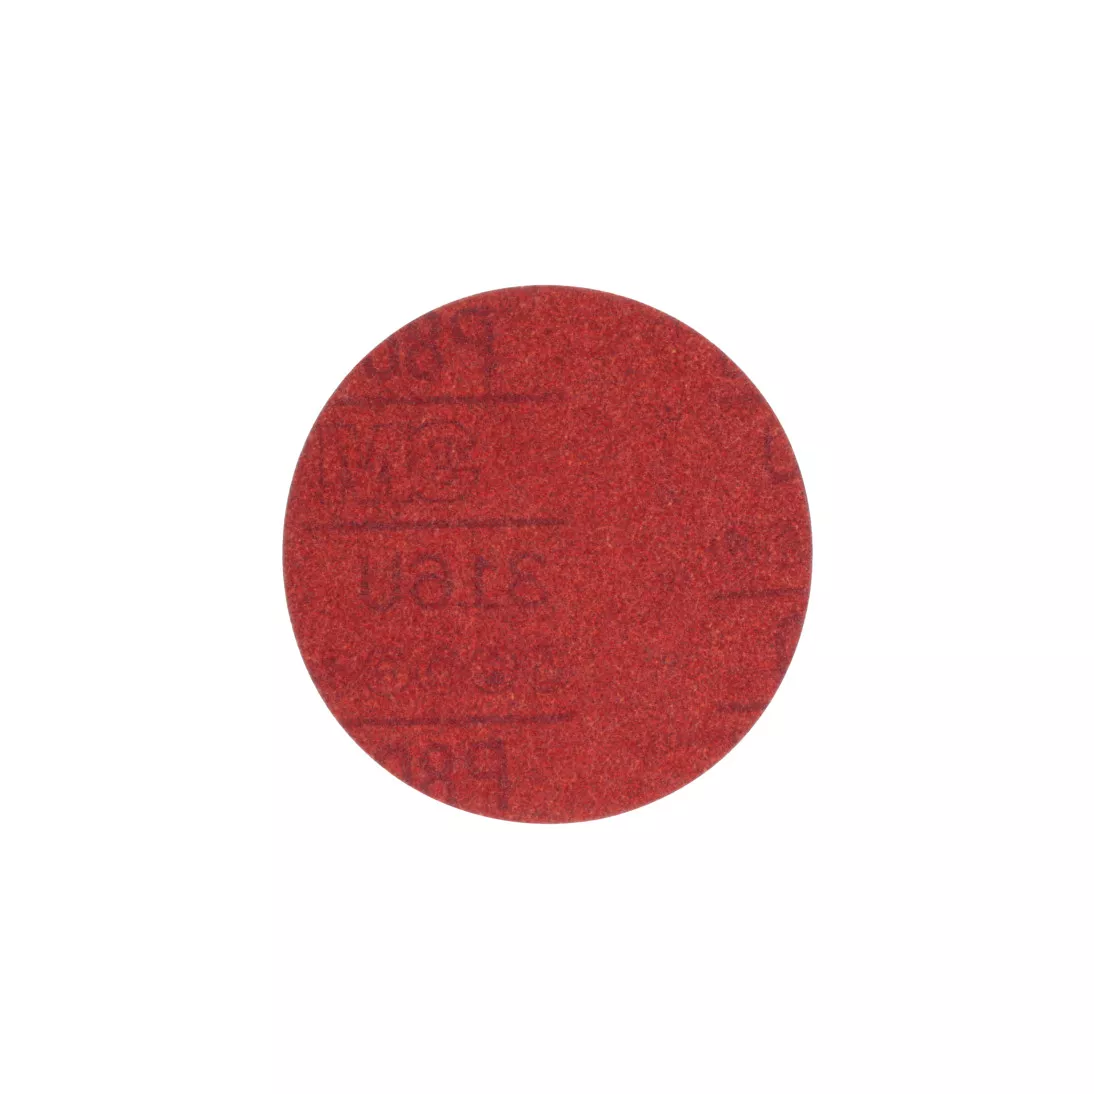 3M™ Hookit™ Red Abrasive Disc, 01302, 5 in, P80, 50 discs per carton, 6
cartons per case